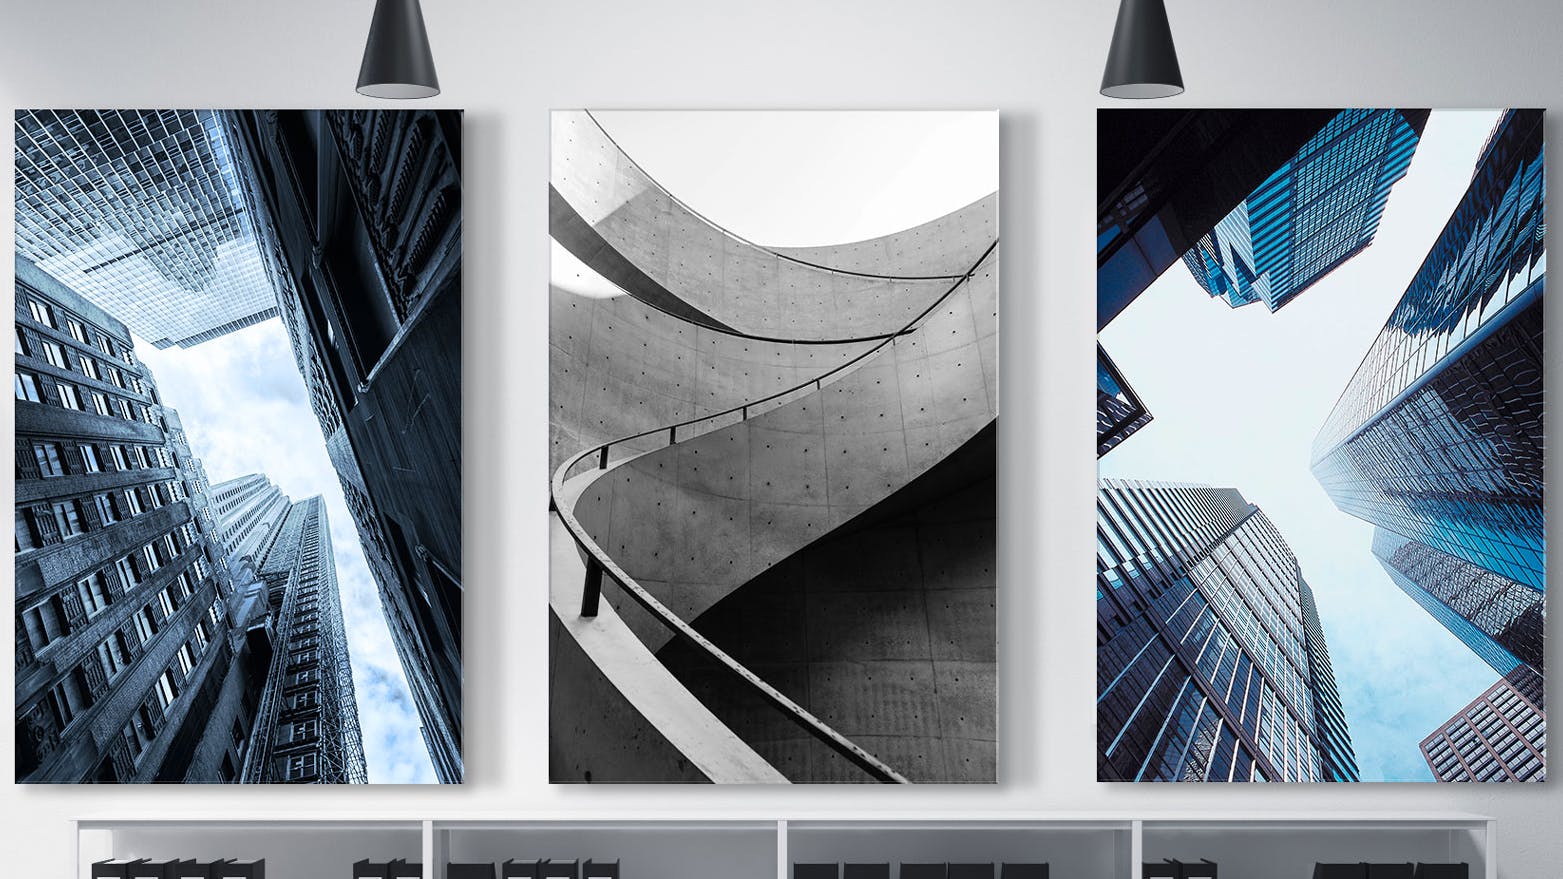 Große Acrylglasbilder mit Architekturmotiven in einem Büro